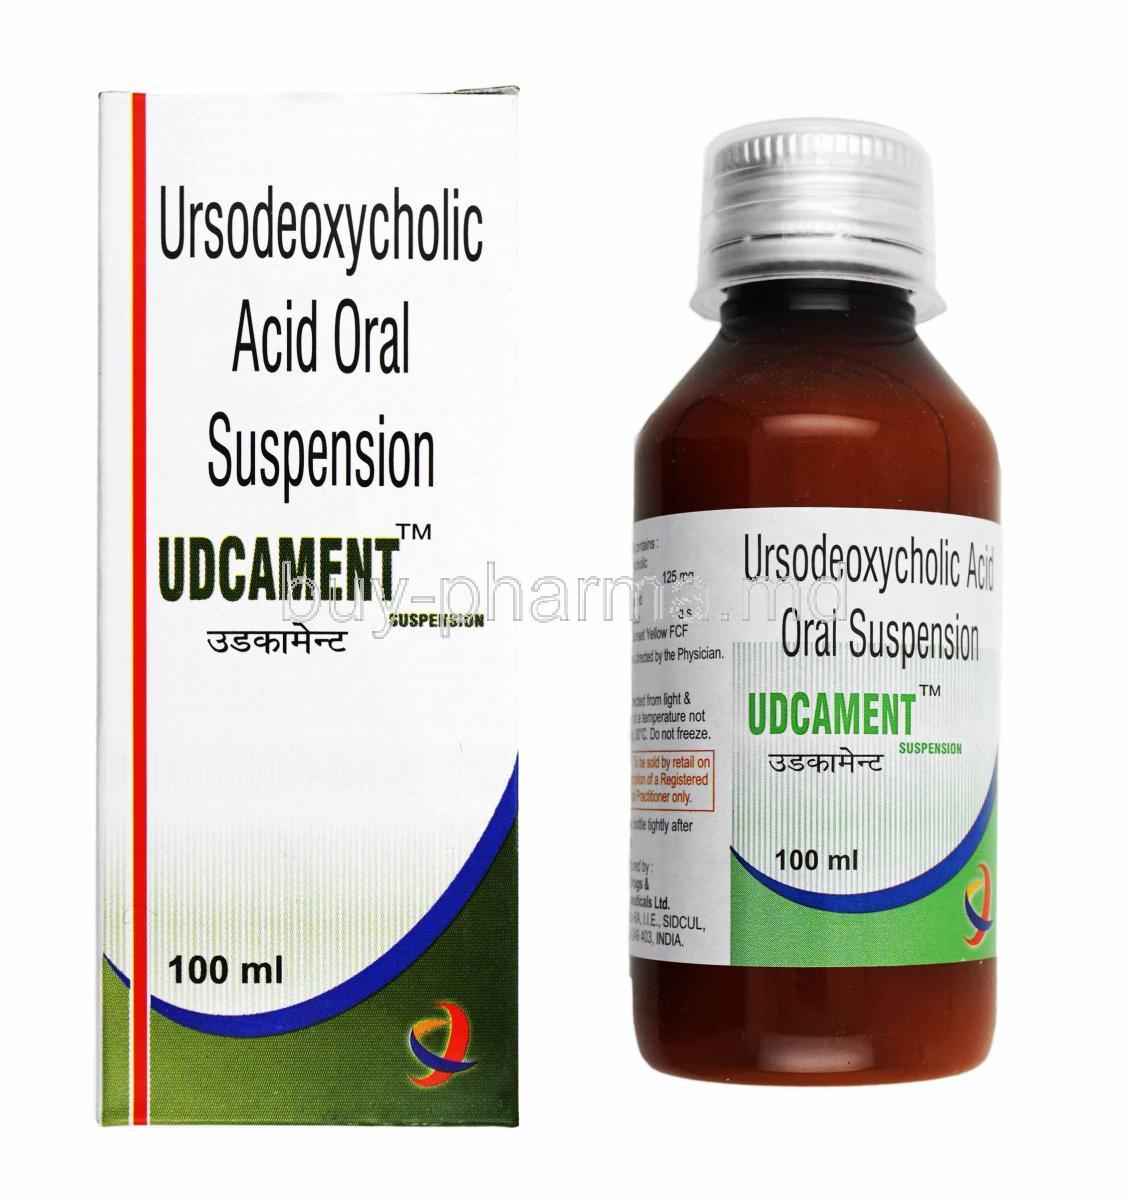 Udcament Oral Suspension, Ursodeoxycholic Acid box and bottle